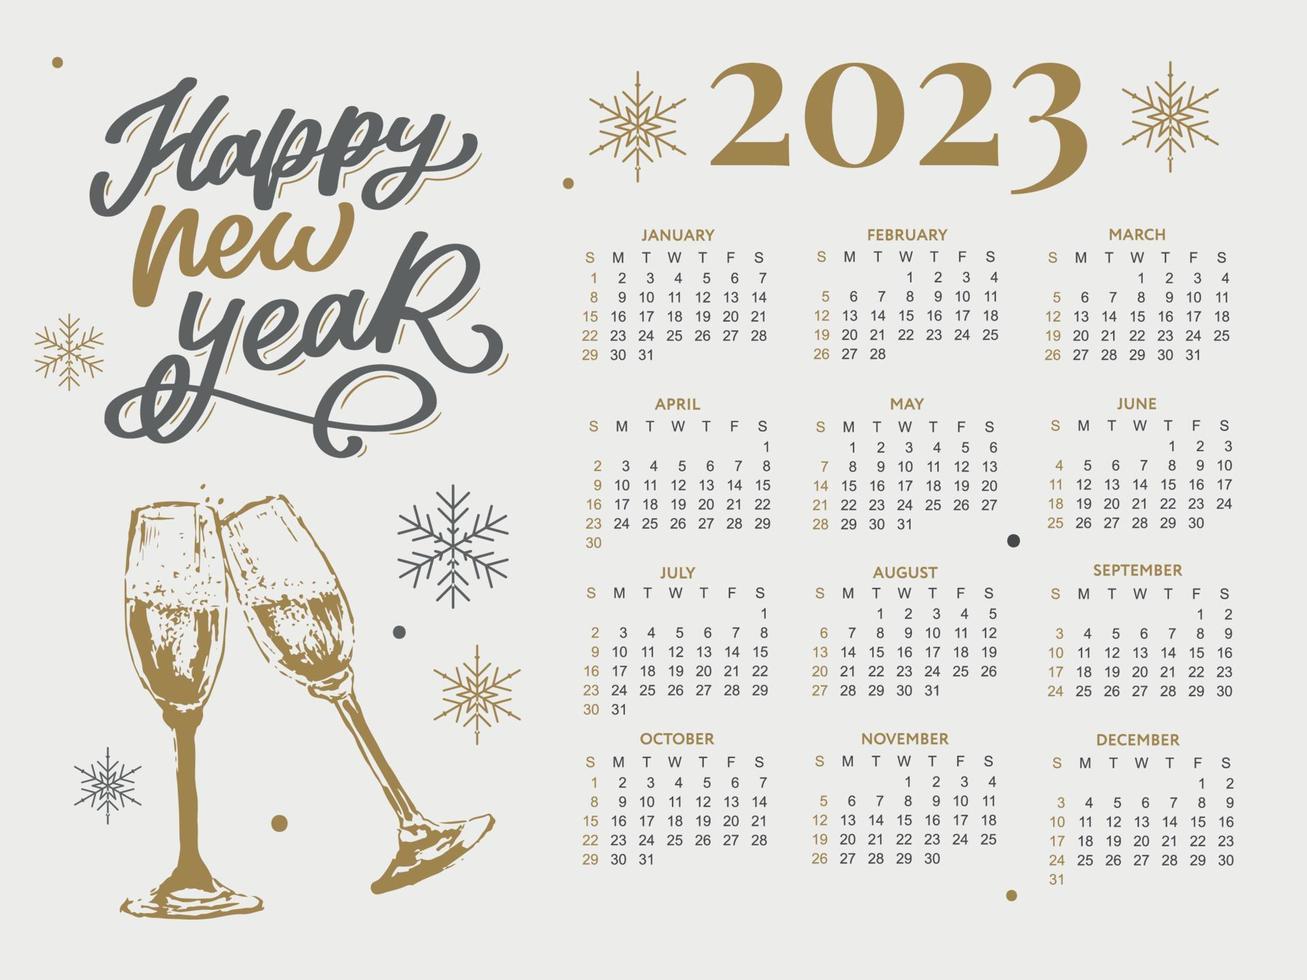 2023 Calendar year vector illustration. The week starts on Sunday. Christmas snowflakes calendar 2023 template. Calendar design Sunday in red colors. Vector